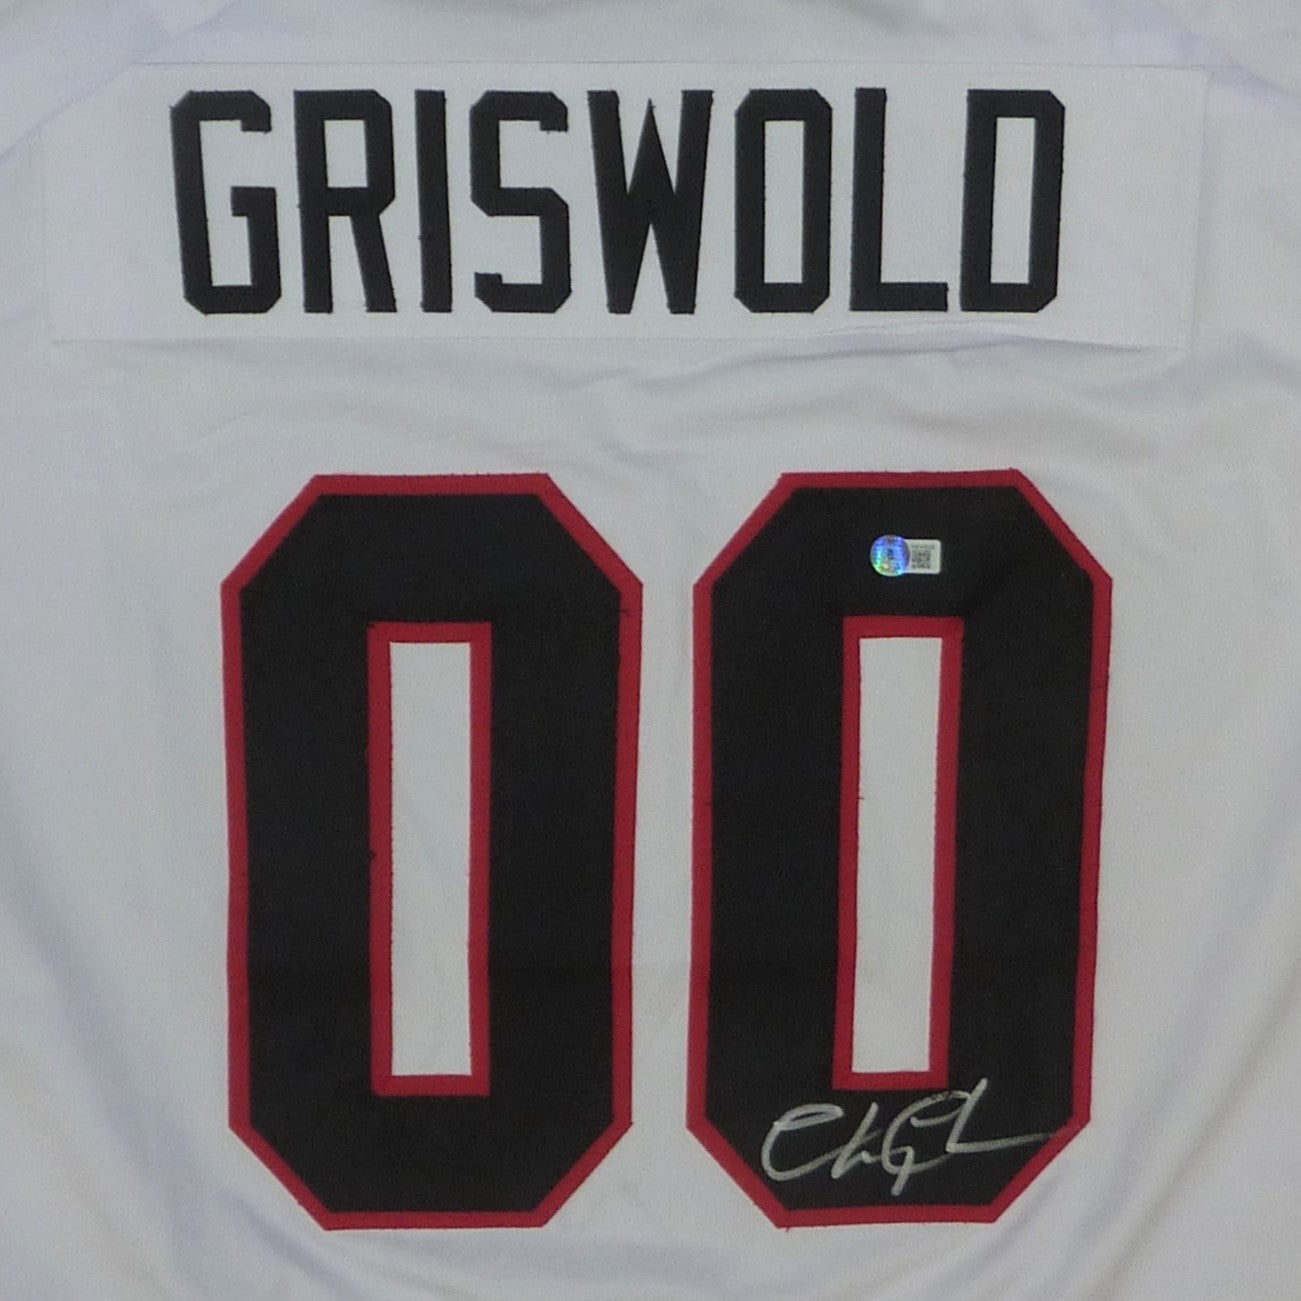 Clark Griswold Chicago Blackhawks hockey 4 jersey